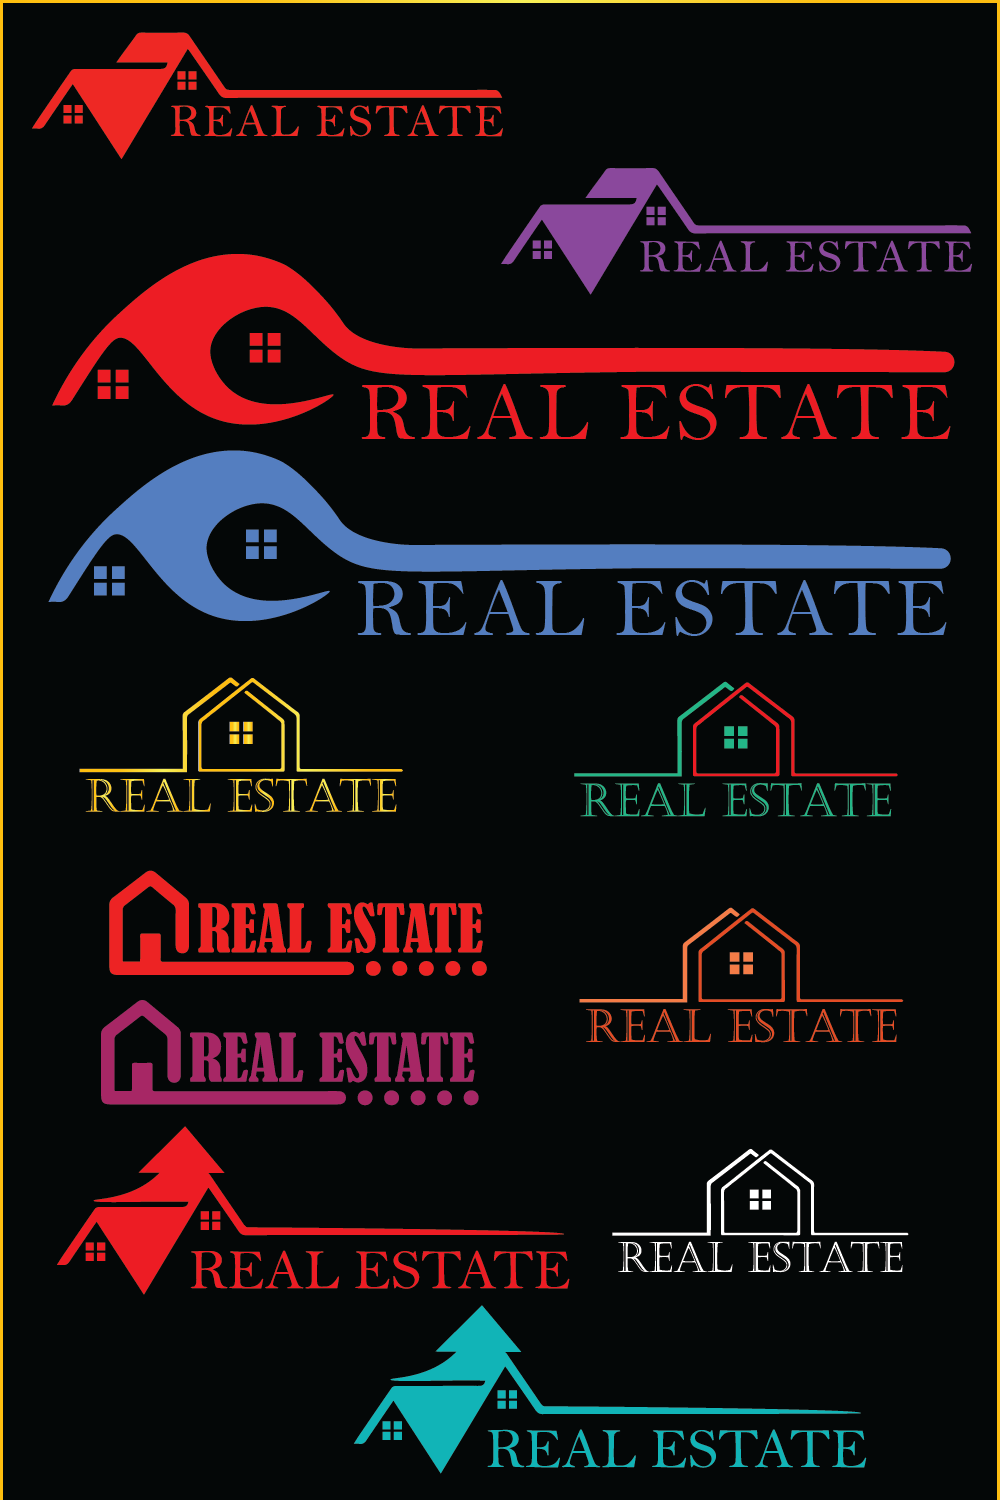 Real Estate logo templates/Unique Real Estate logos/Bundle of real estate logos pinterest preview image.